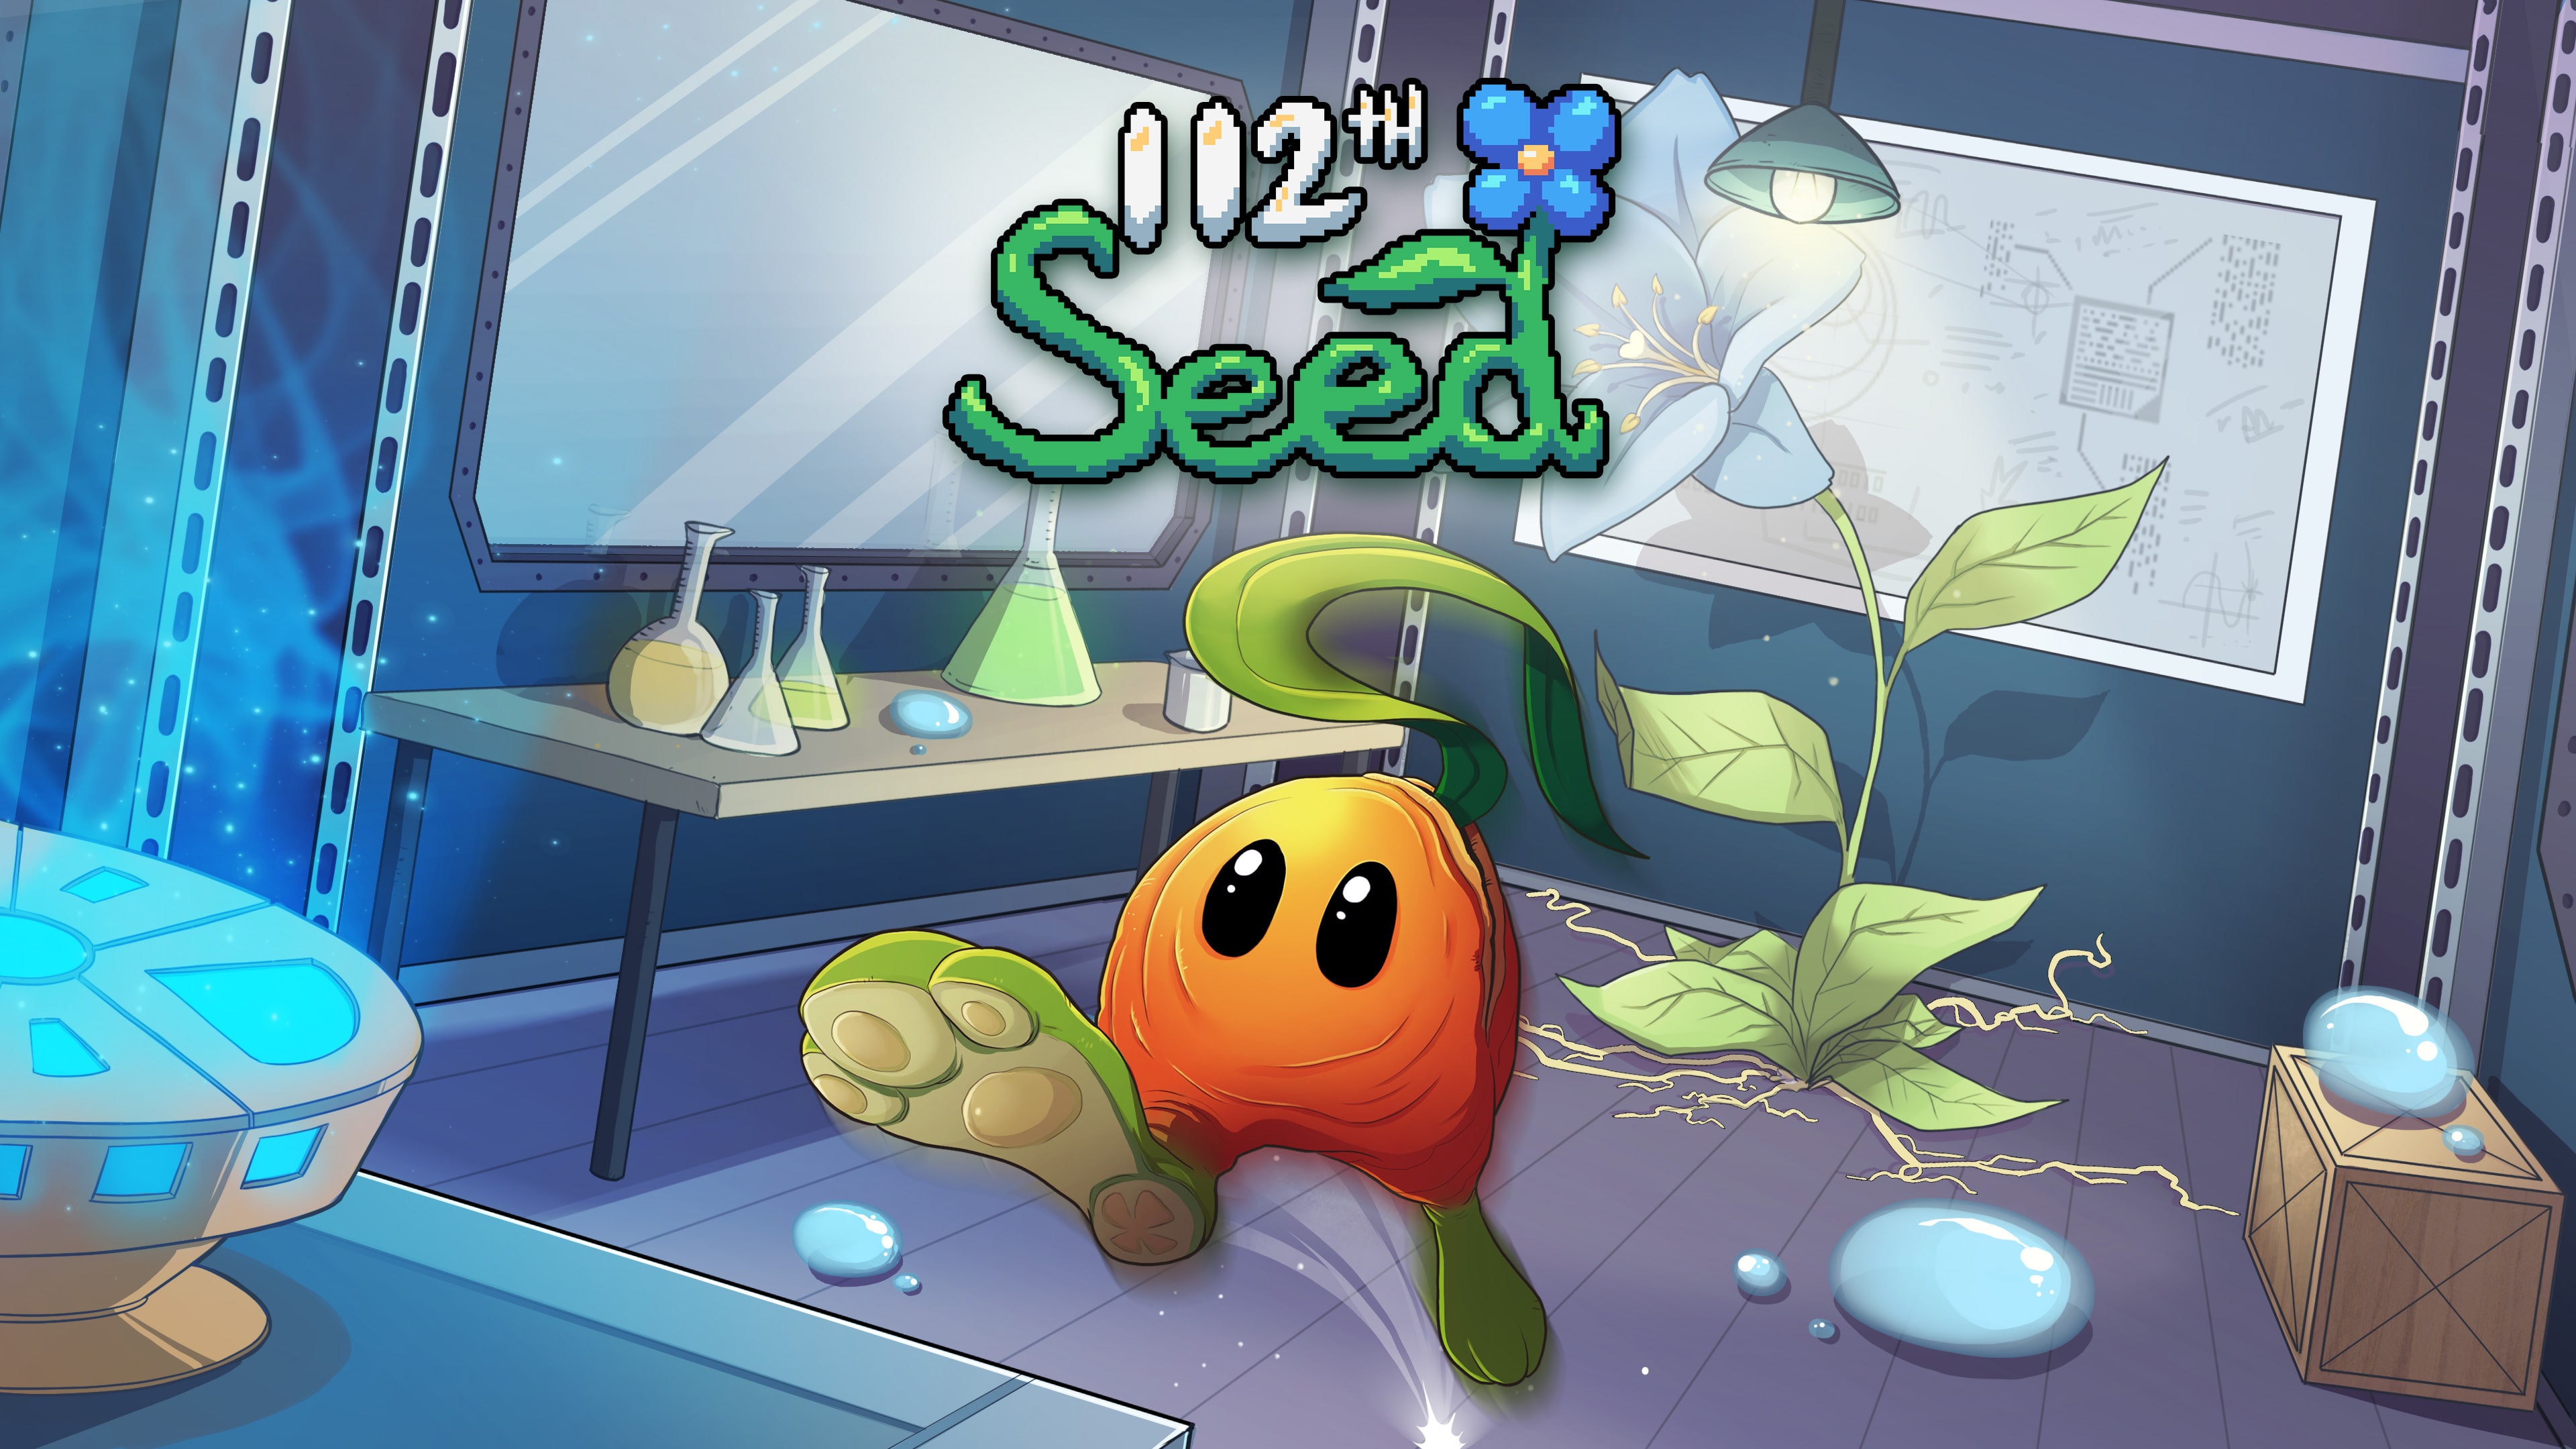 112th Seed (English, Japanese)